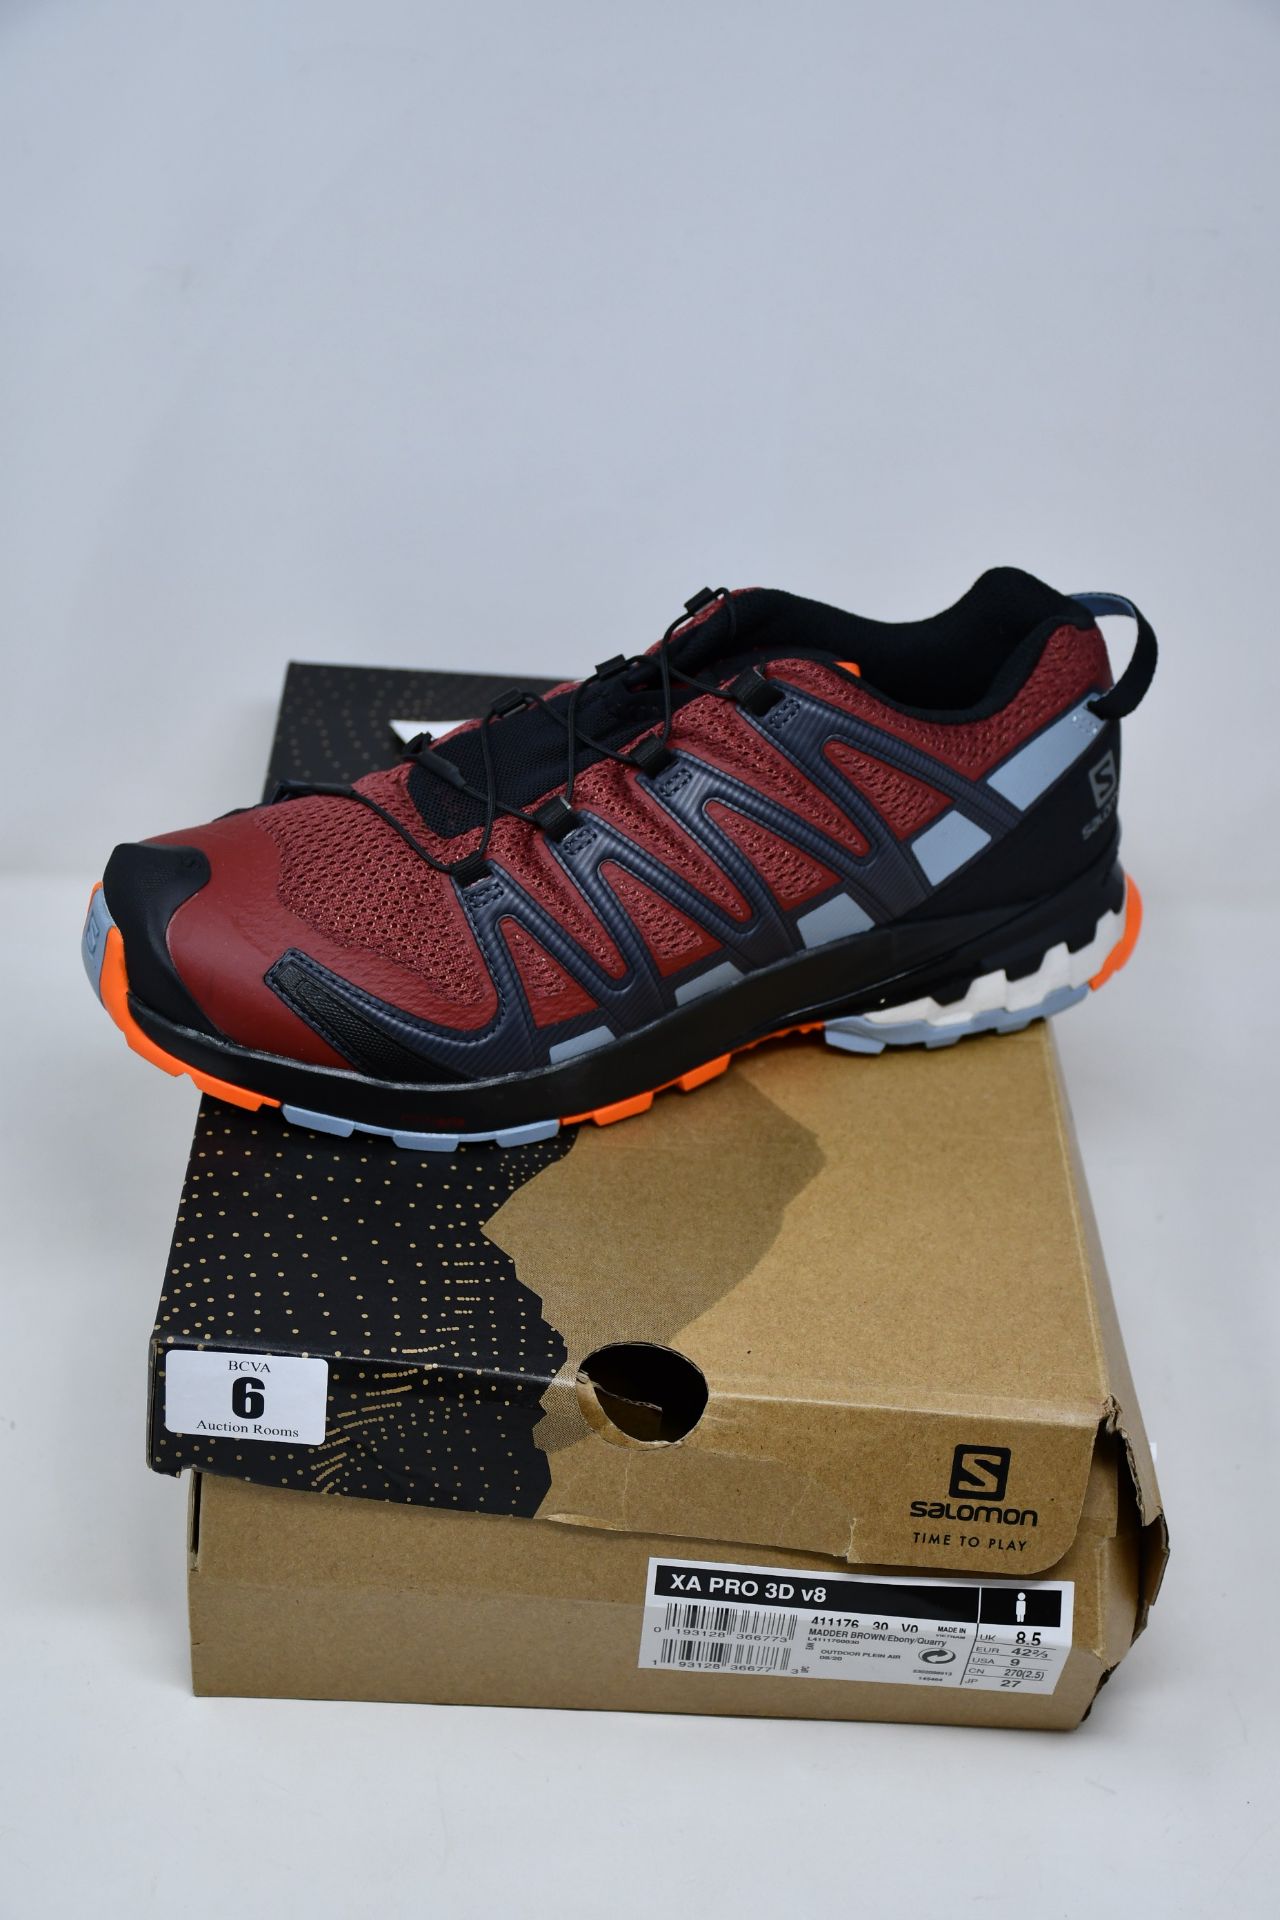 A pair of as new Salomon XA Pro 3D v8 hiking shoes (UK 8.5).